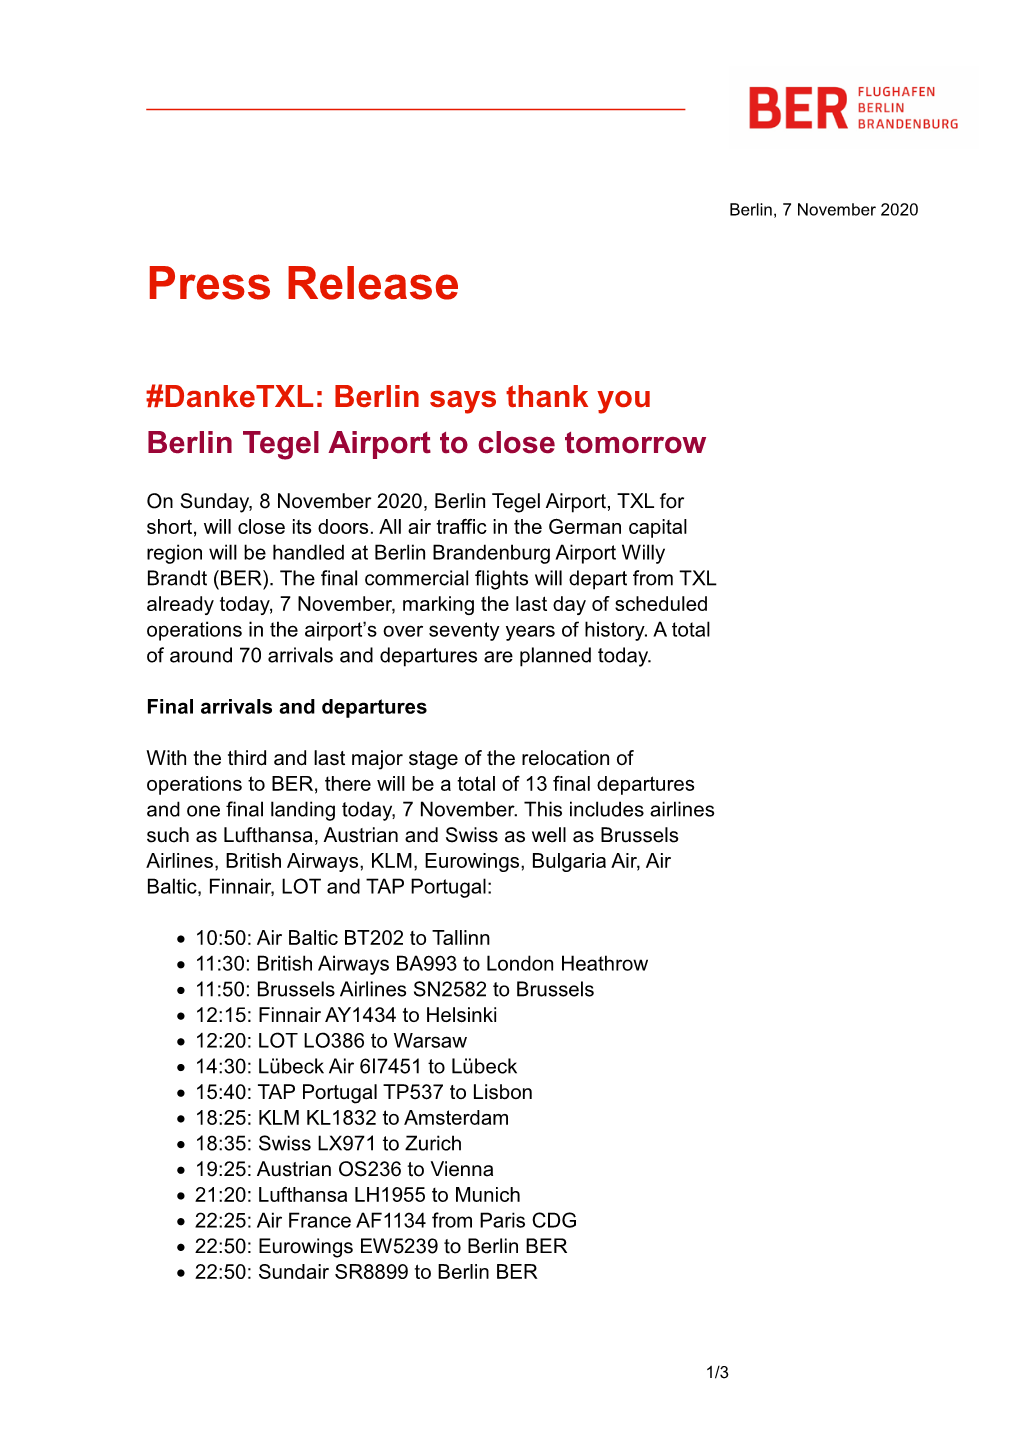 Press Release #Danketxl: Berlin Says Thank You Berlin Tegel Airport